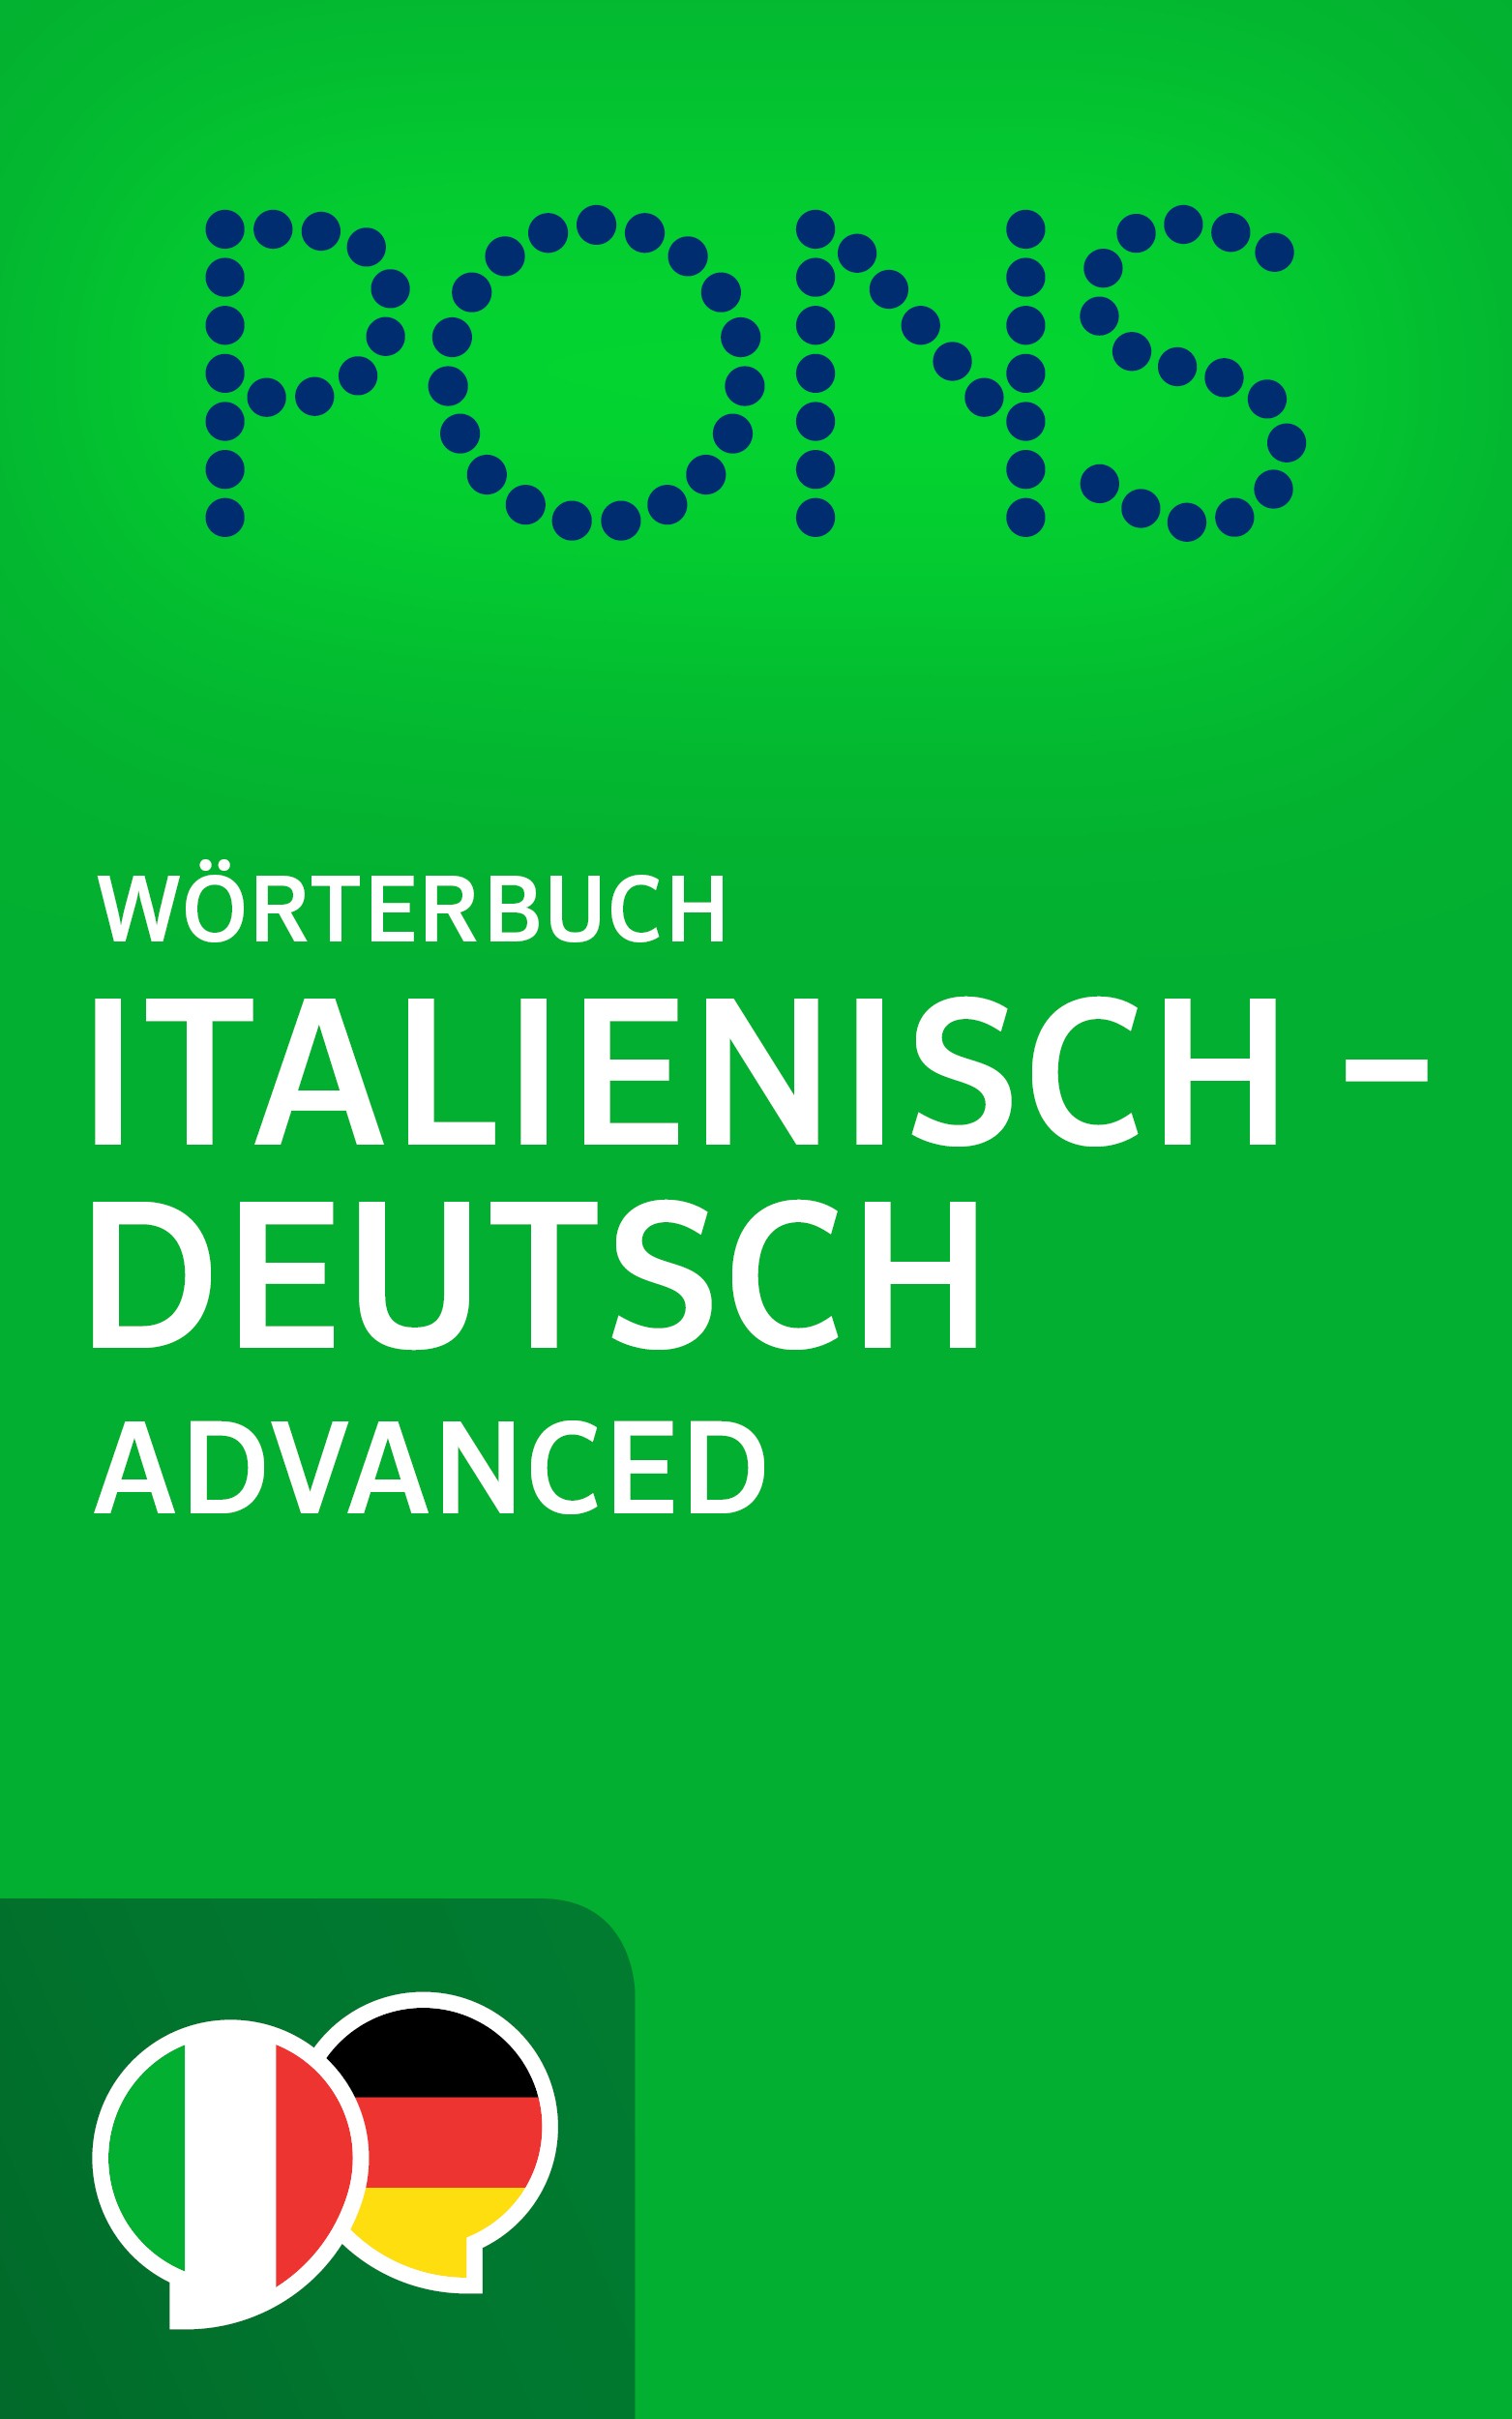 E-Book: PONS Wörterbuch Italienisch -> Deutsch ADVANCED